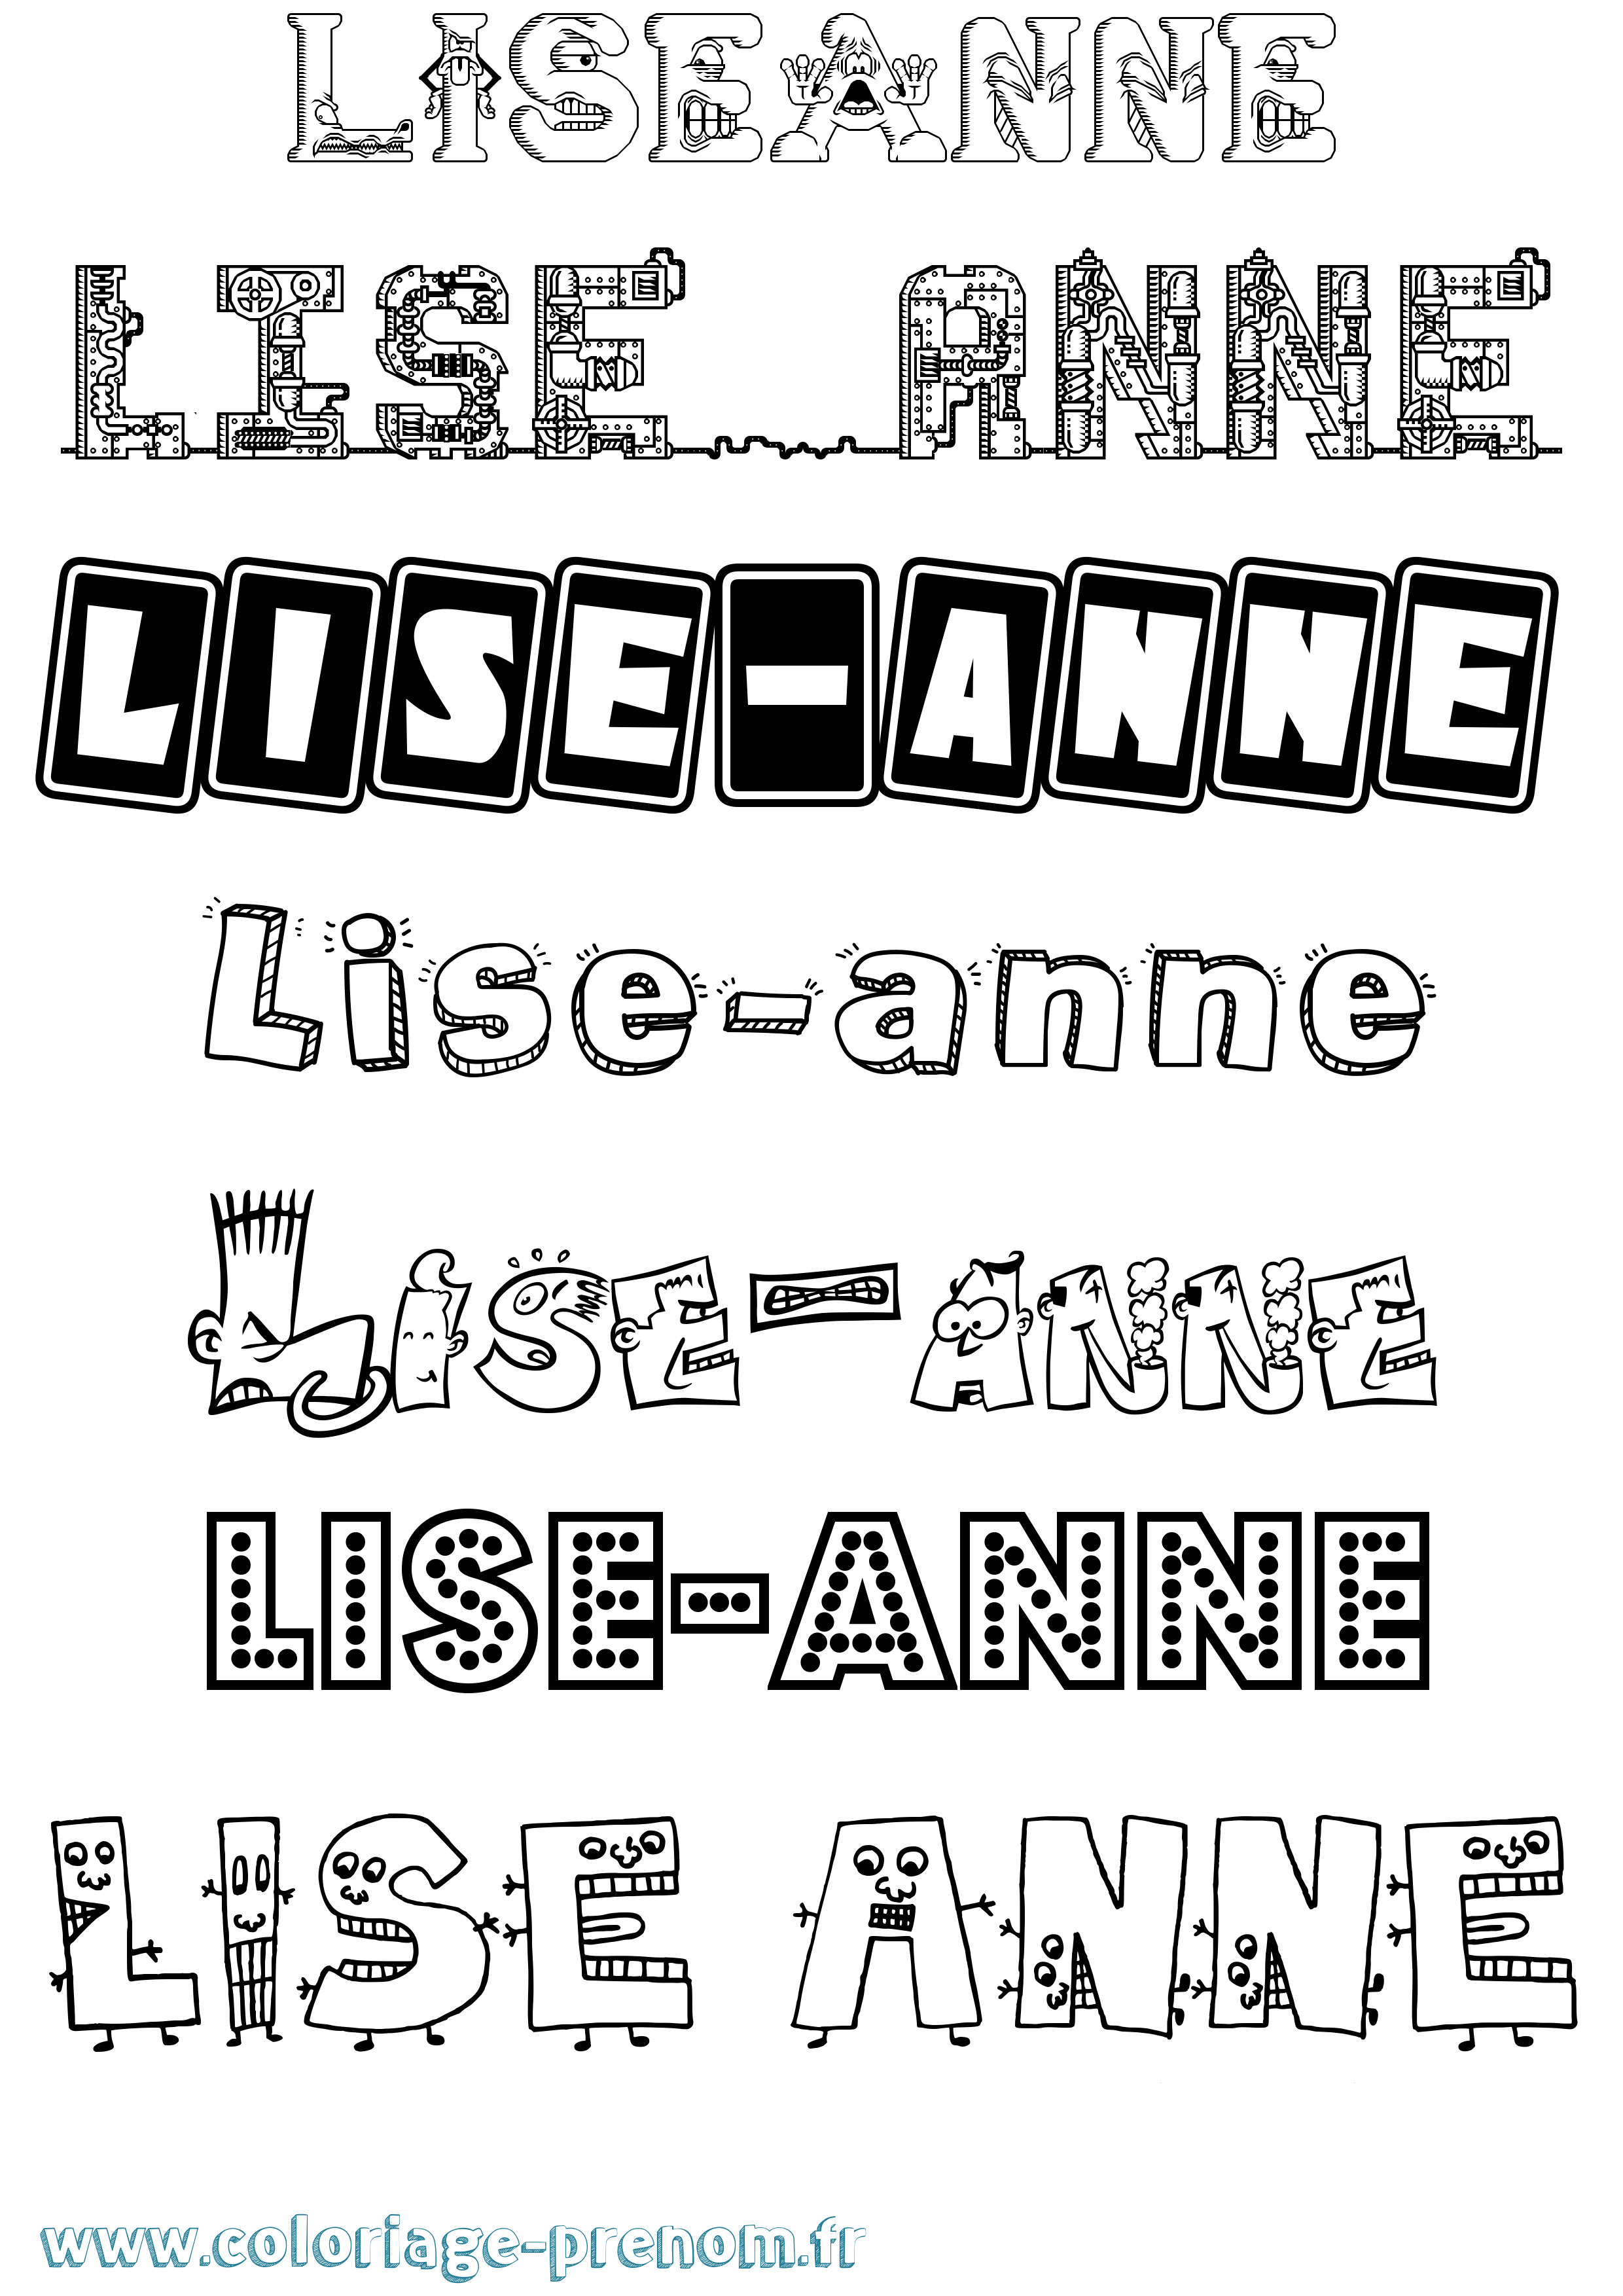 Coloriage prénom Lise-Anne Fun